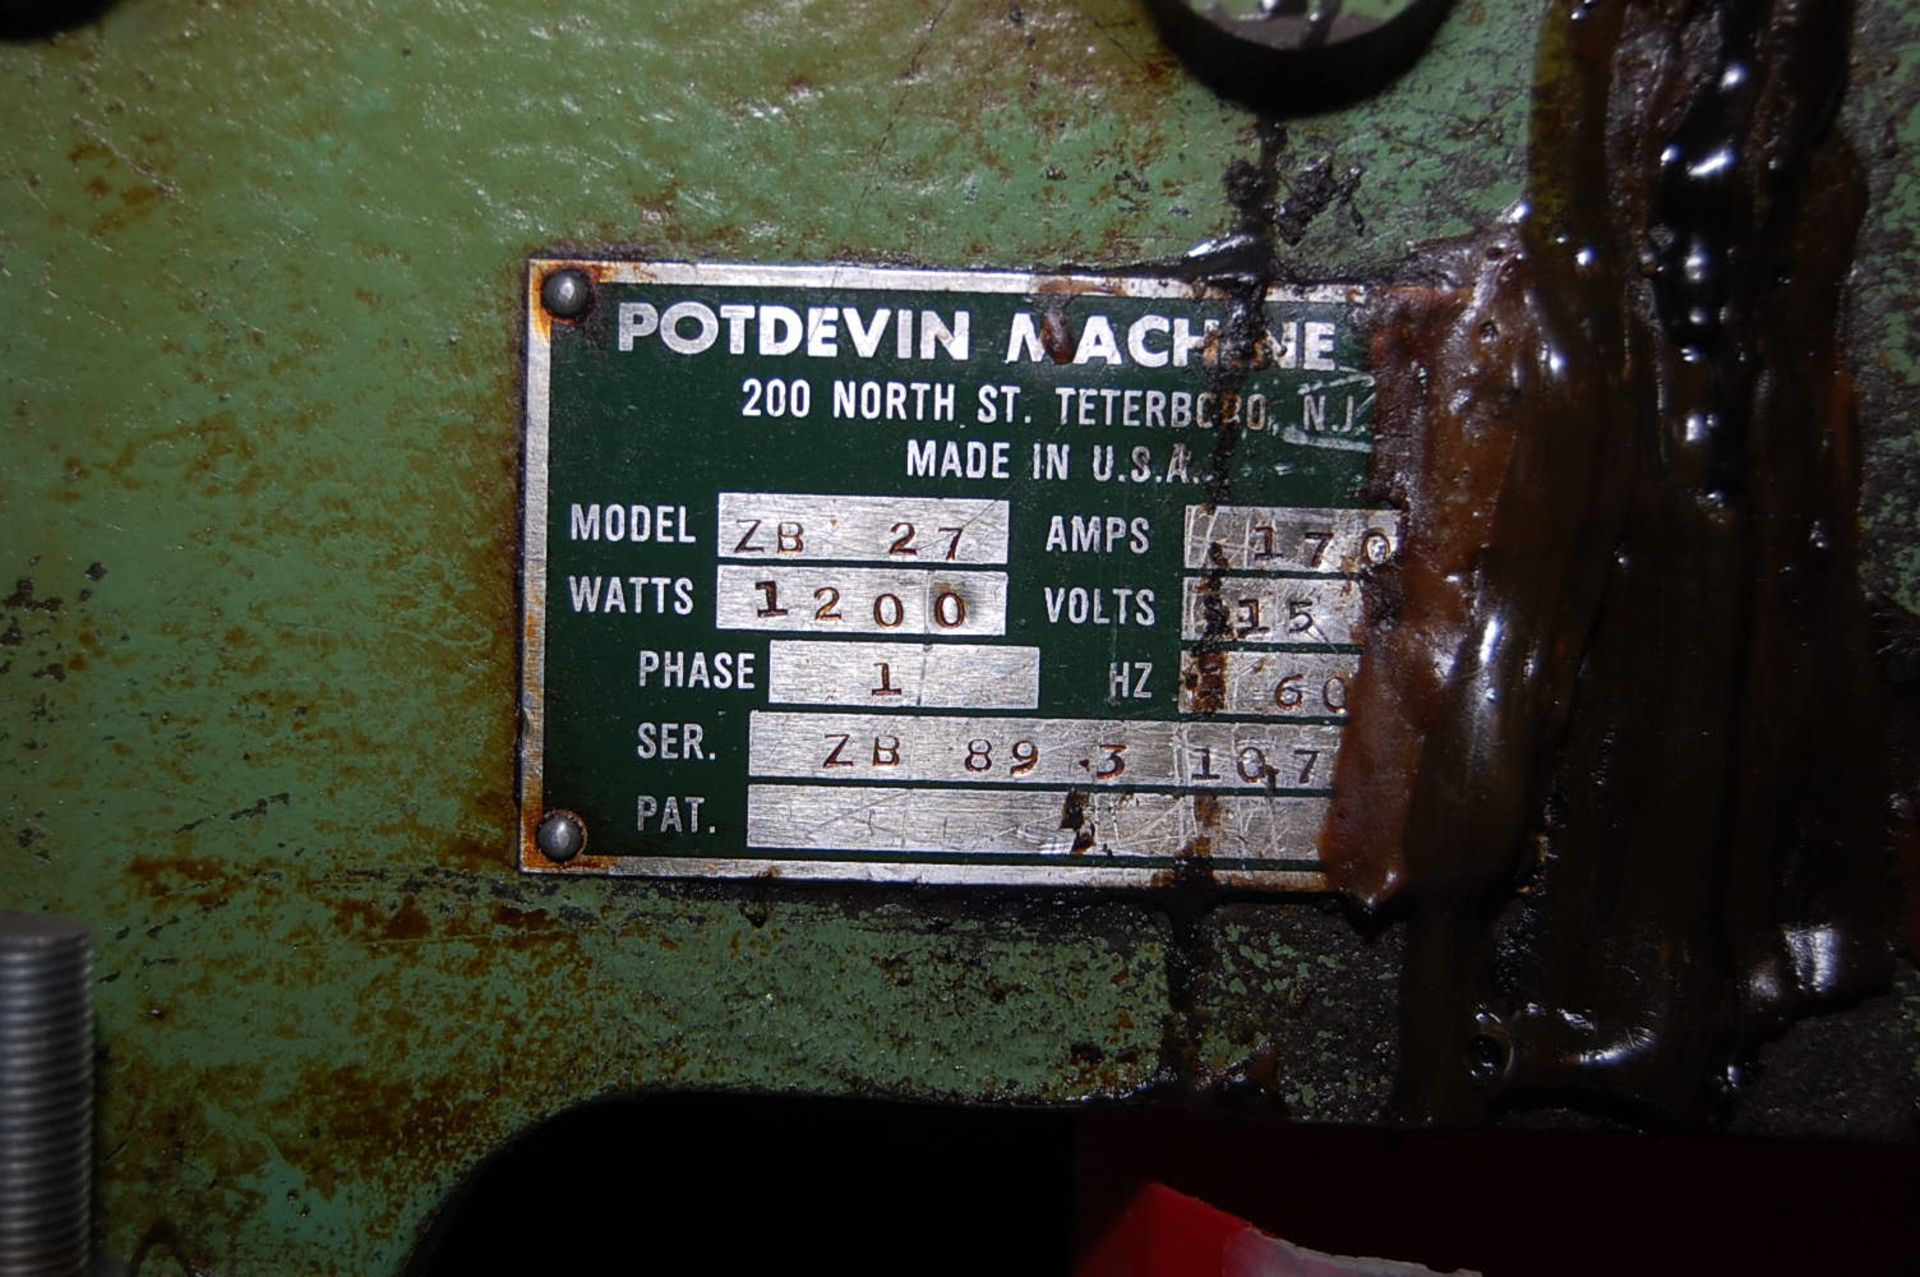 Potdevin Type ZB-27 Gluer, 27 in. Rollers, 115 Volt Motor, SN ZB893107 - Image 2 of 2